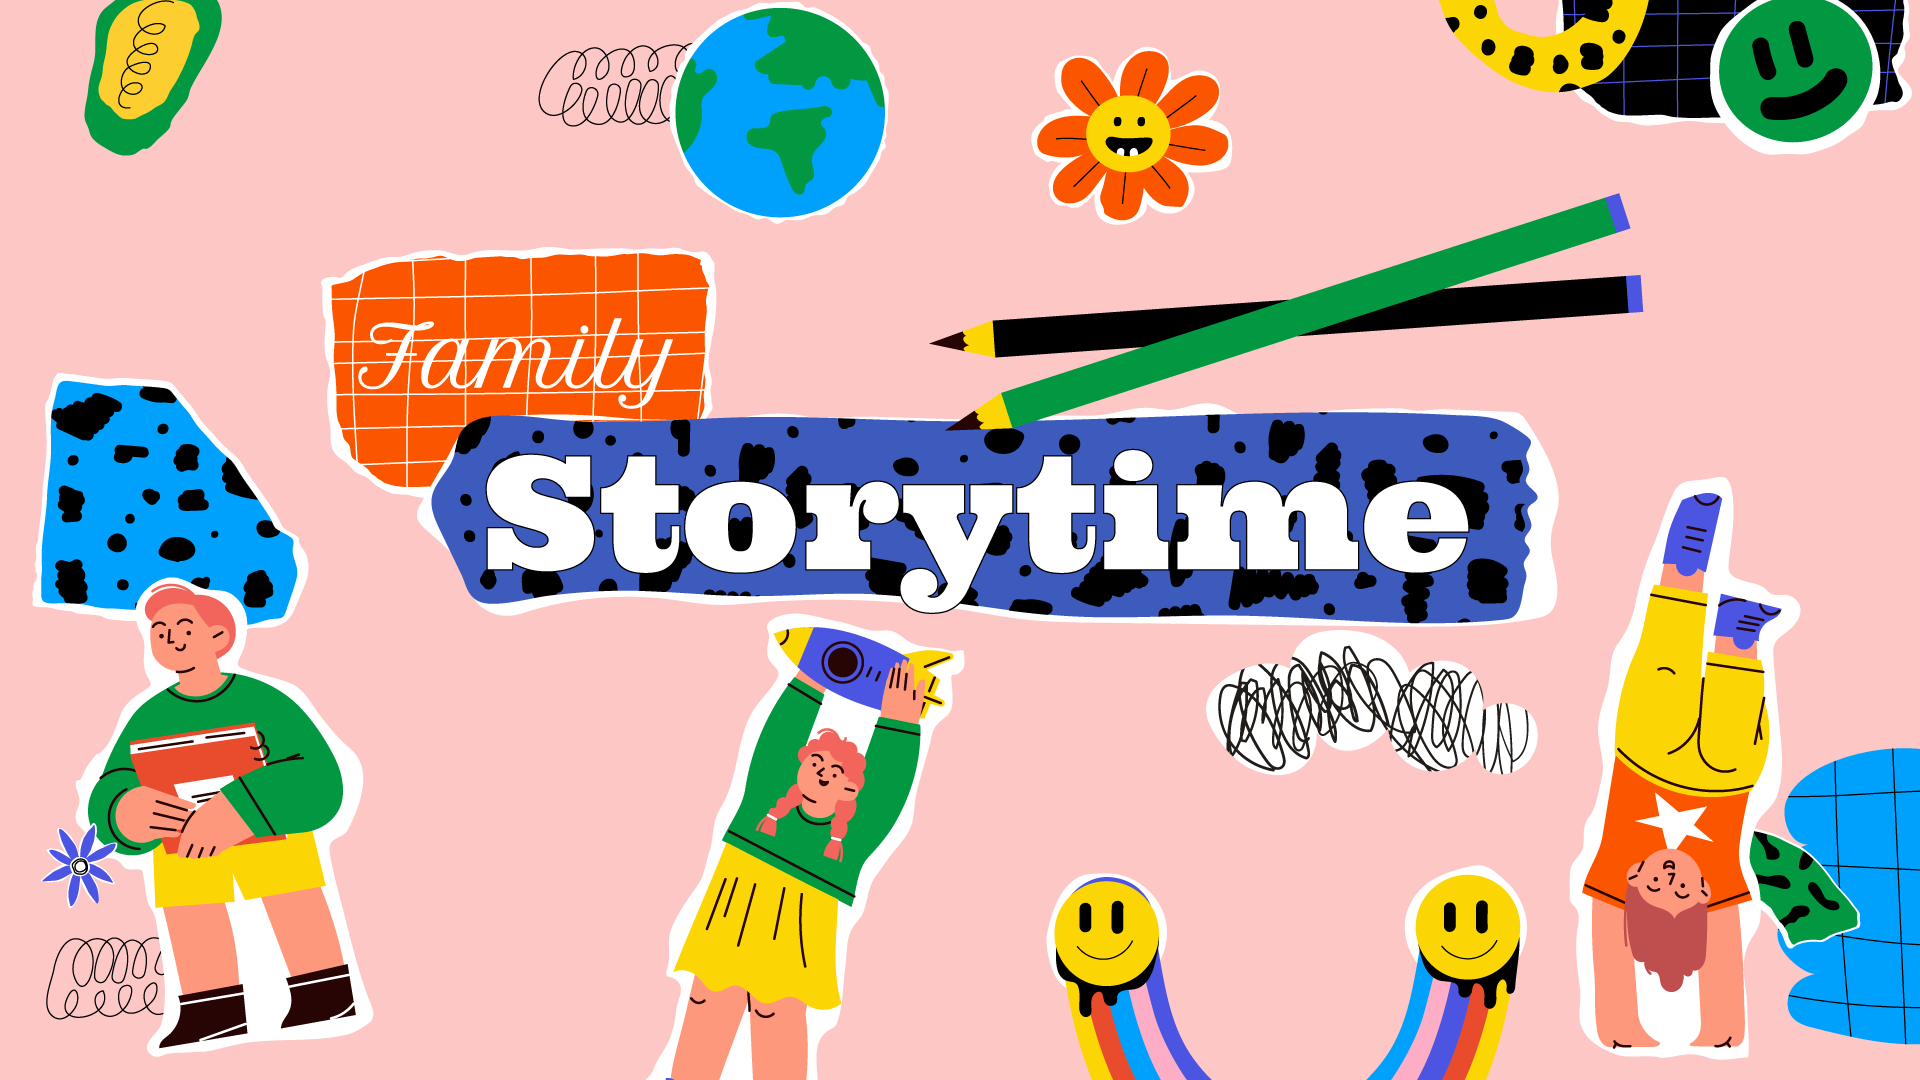 event banner: family storytime